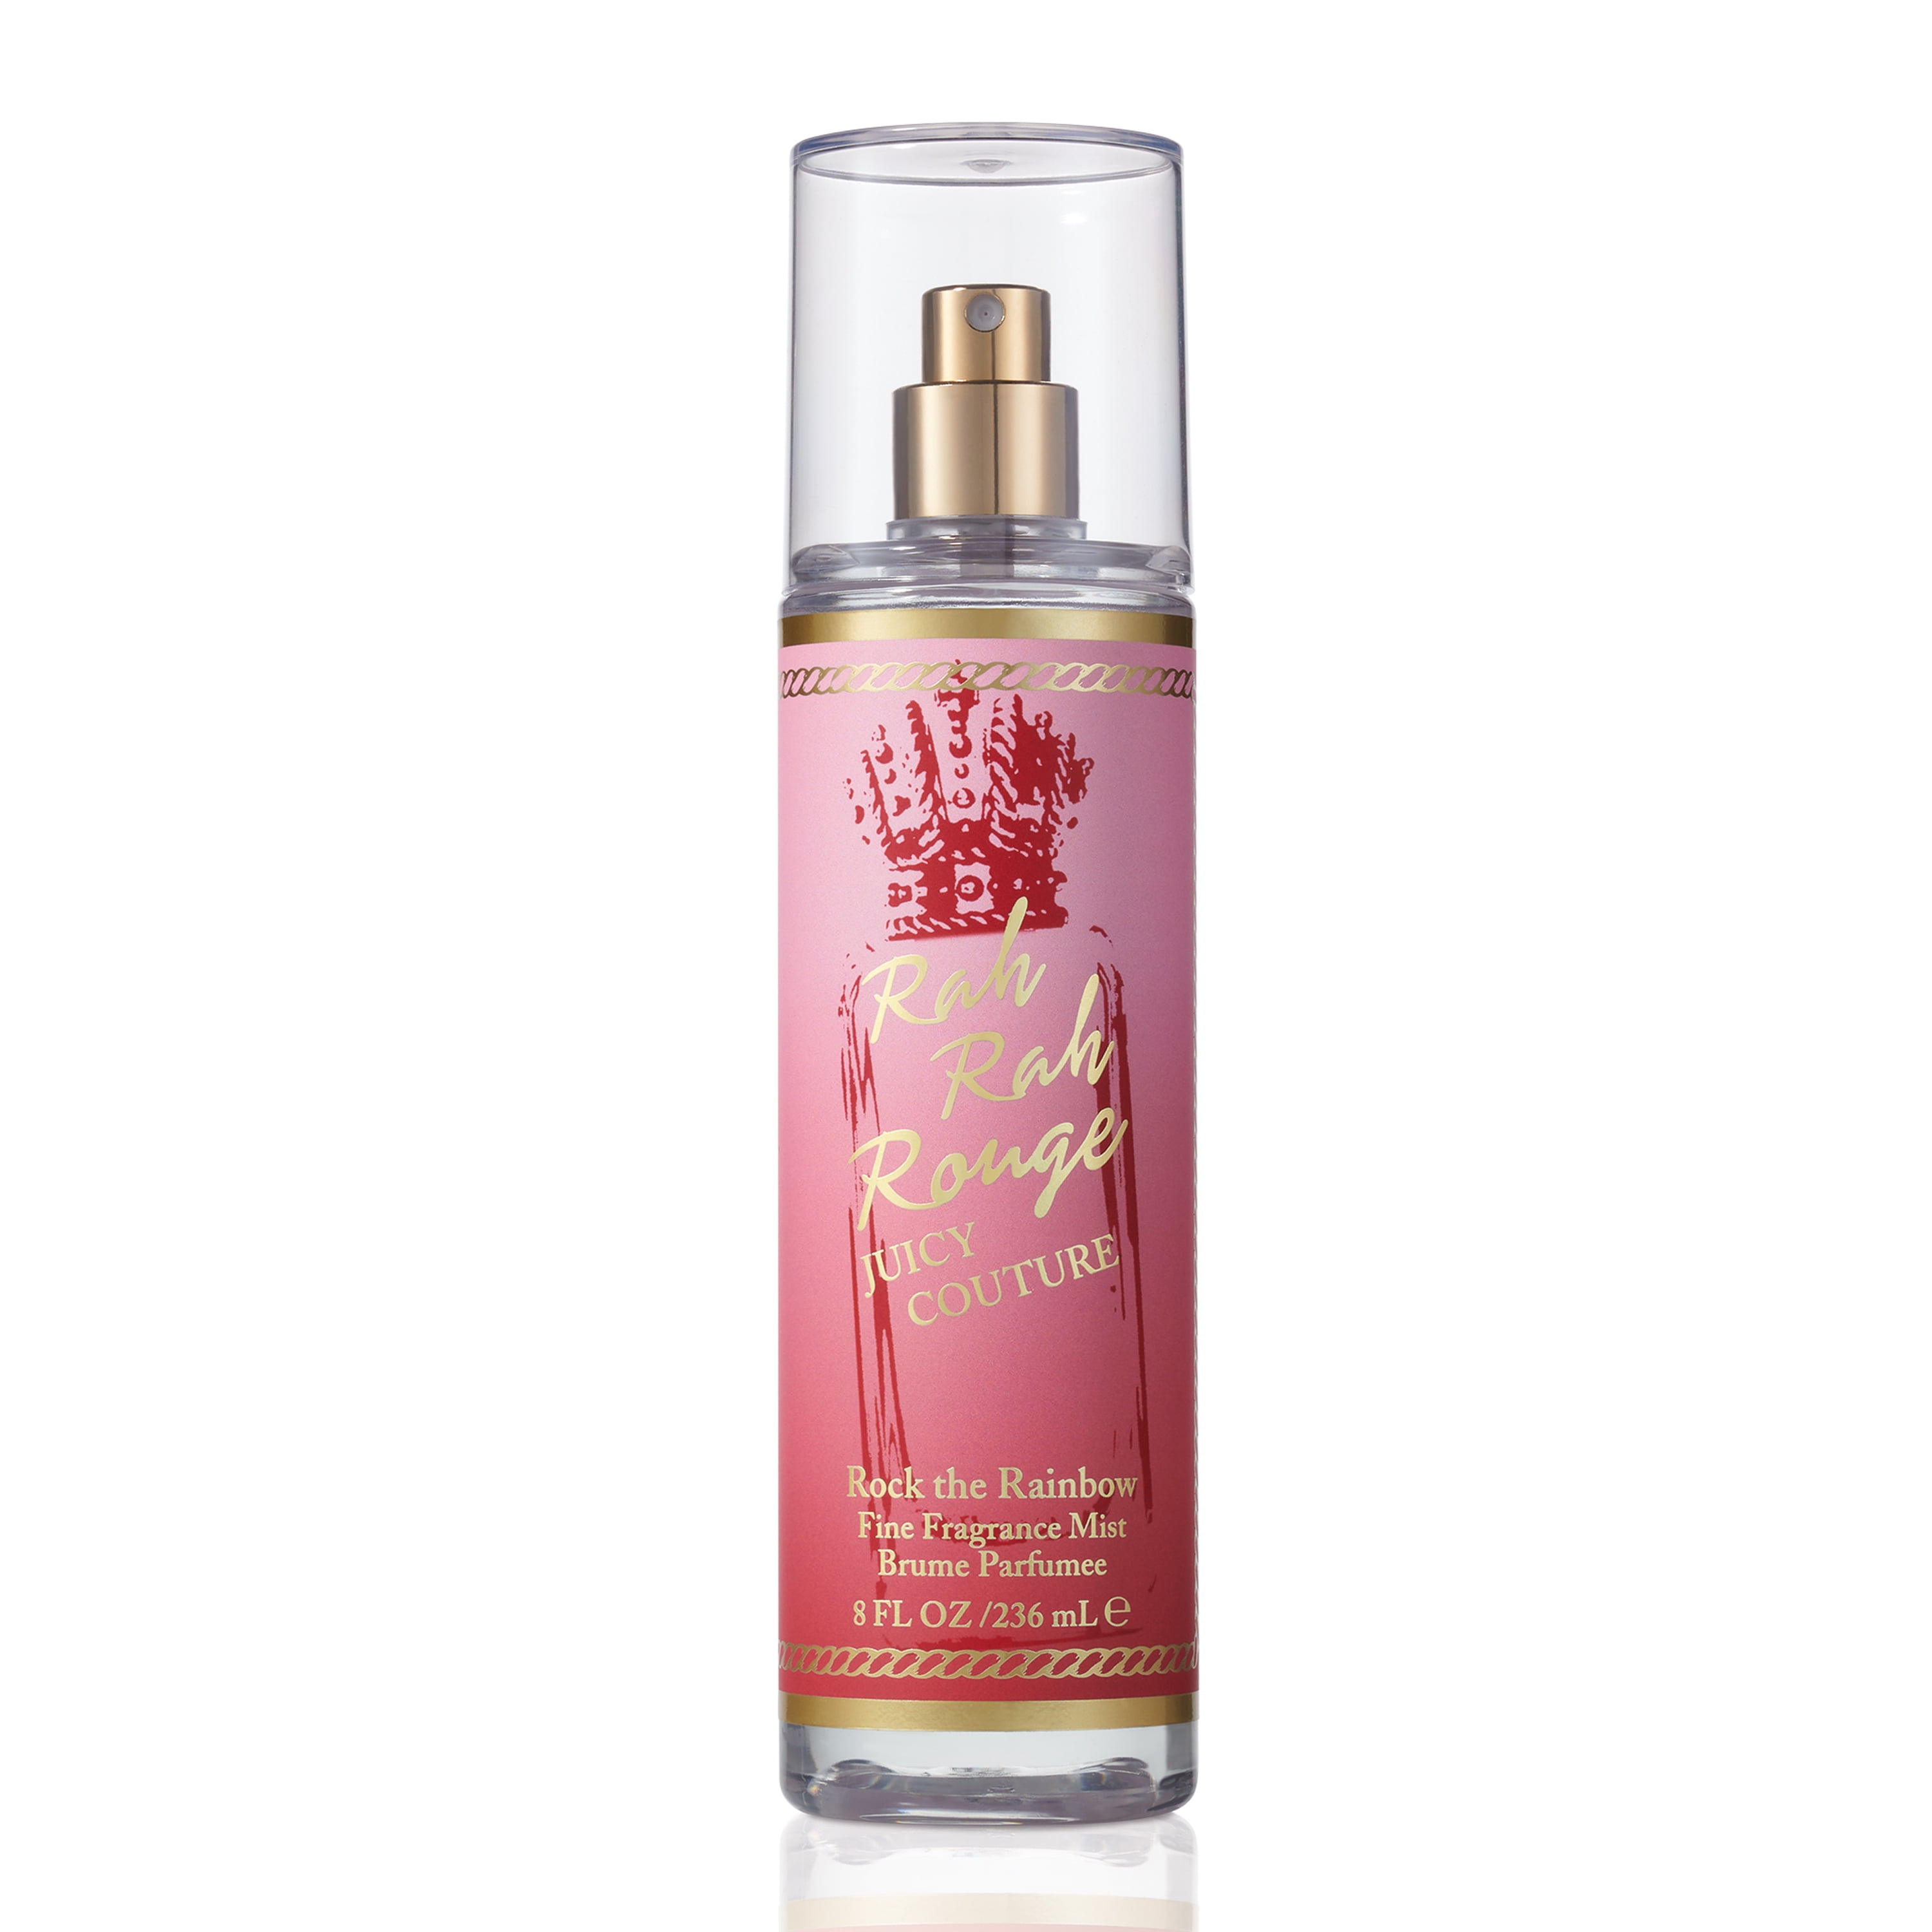 Juicy Couture Rah Rah Rouge Body Mist Spray, Perfume for Women, 8.0 fl. oz